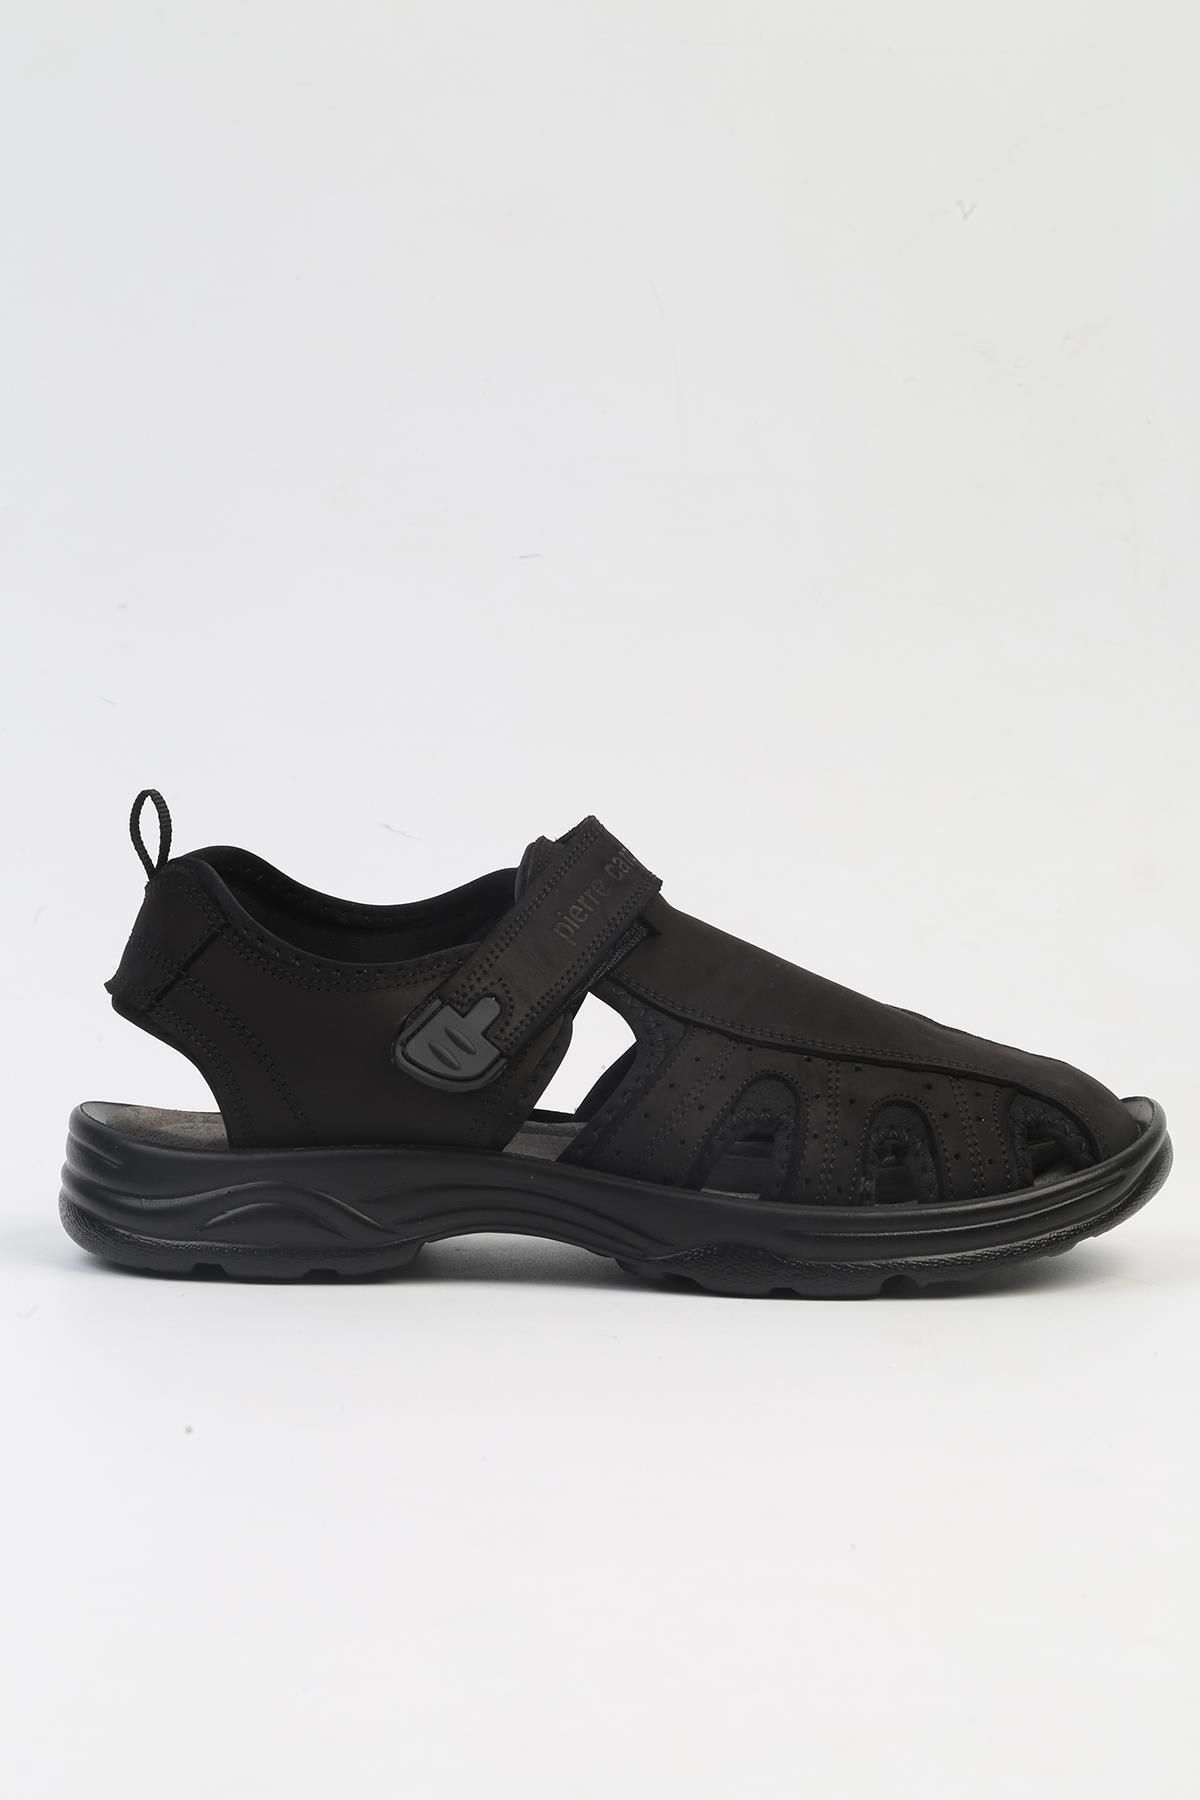 Pierre Cardin ® |  PC-7169- 2105 Siyah-Erkek Sandalet